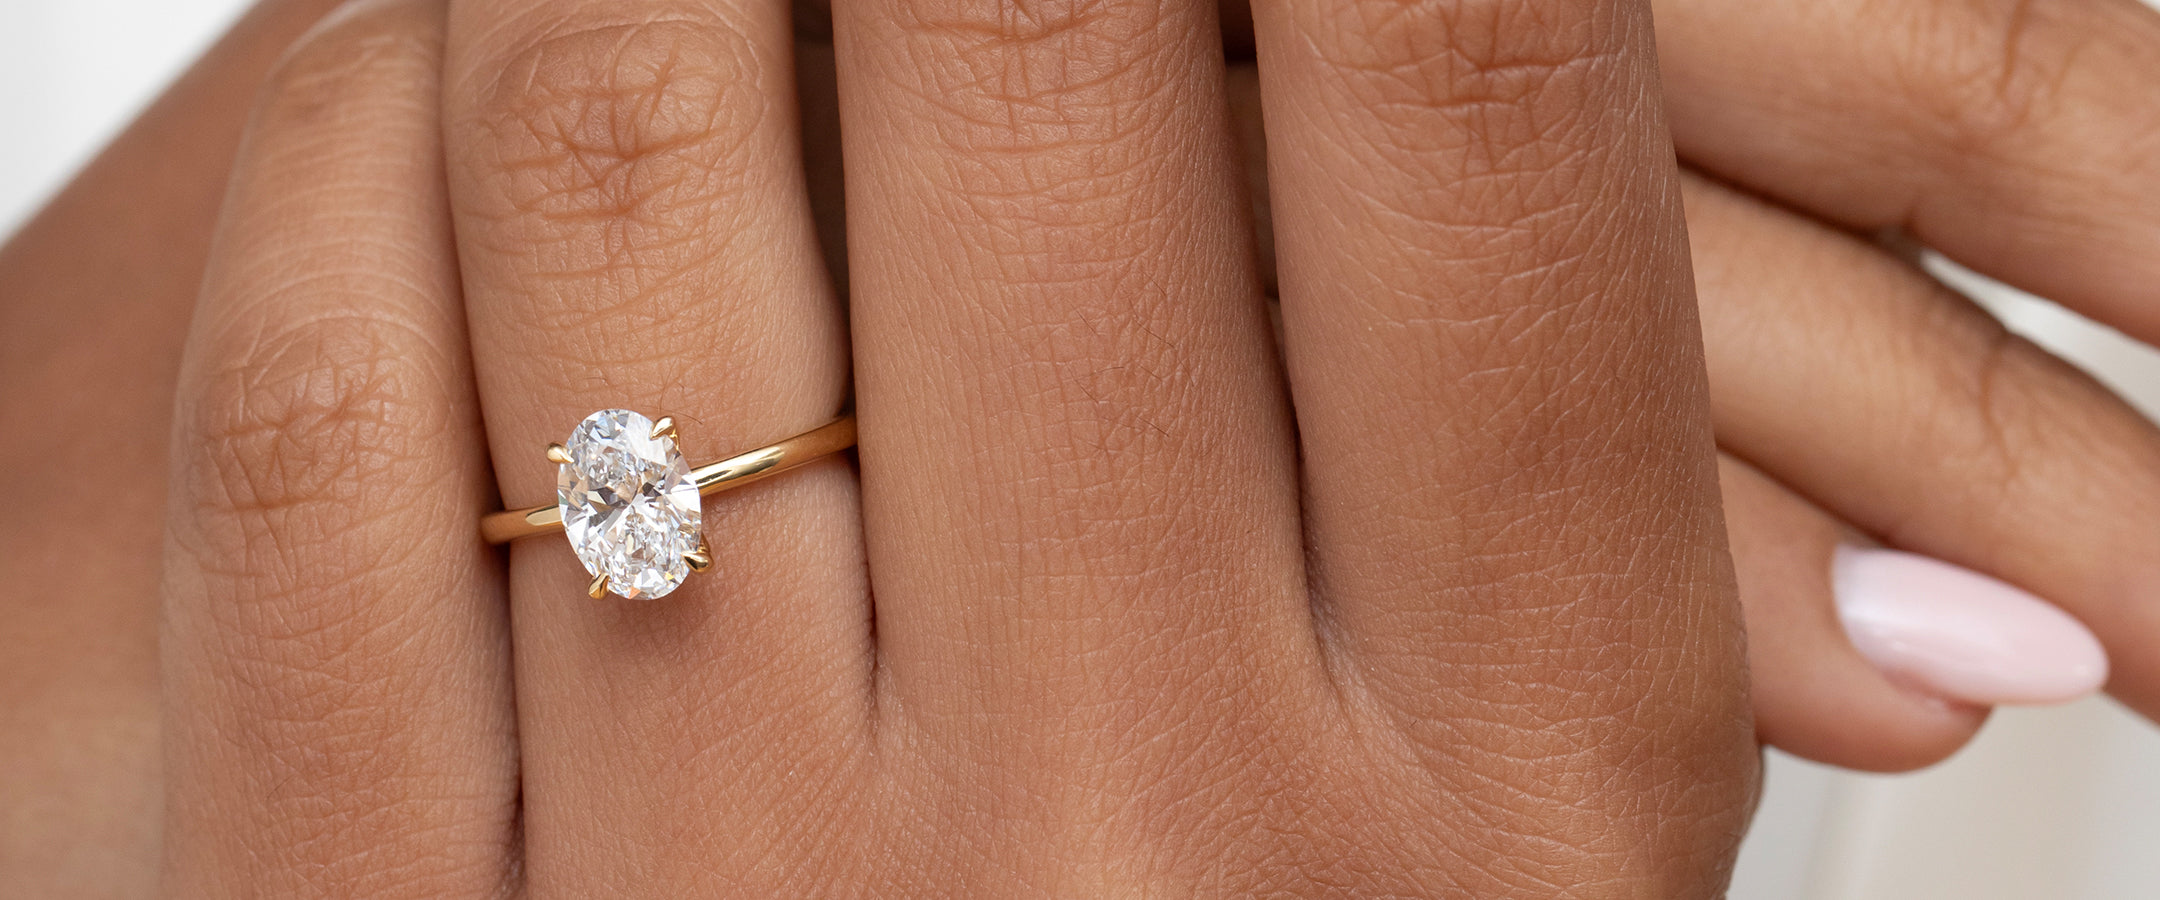 Oval Cut Diamond Engagement Rings at Gear Jewellers Dublin